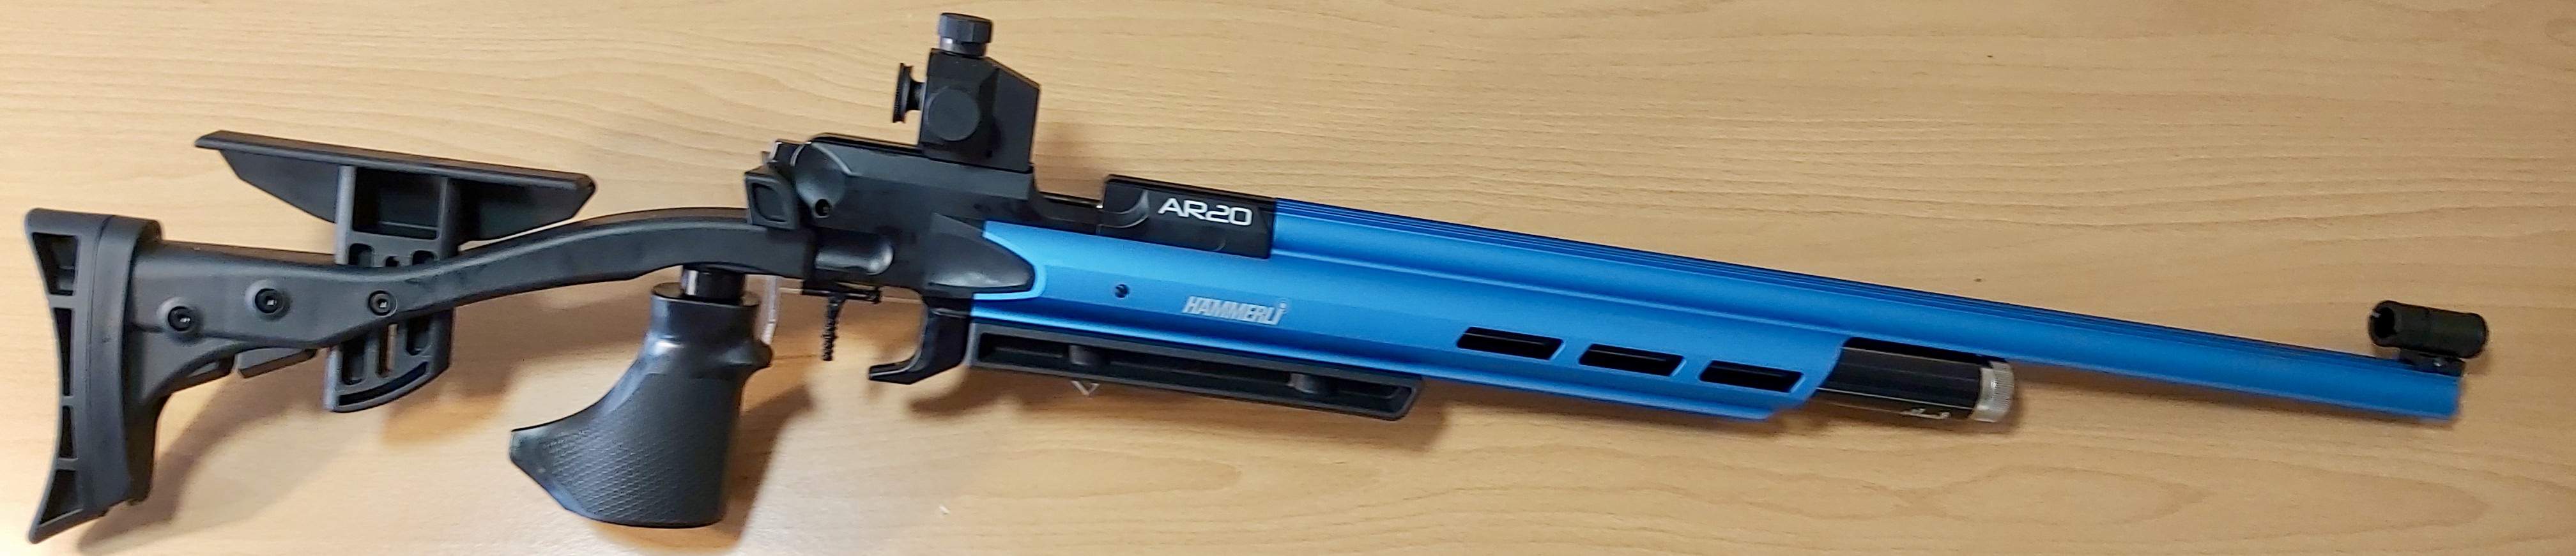 Hammerli AR20 blue pro, cal 4,5mm, Prijs 1150€